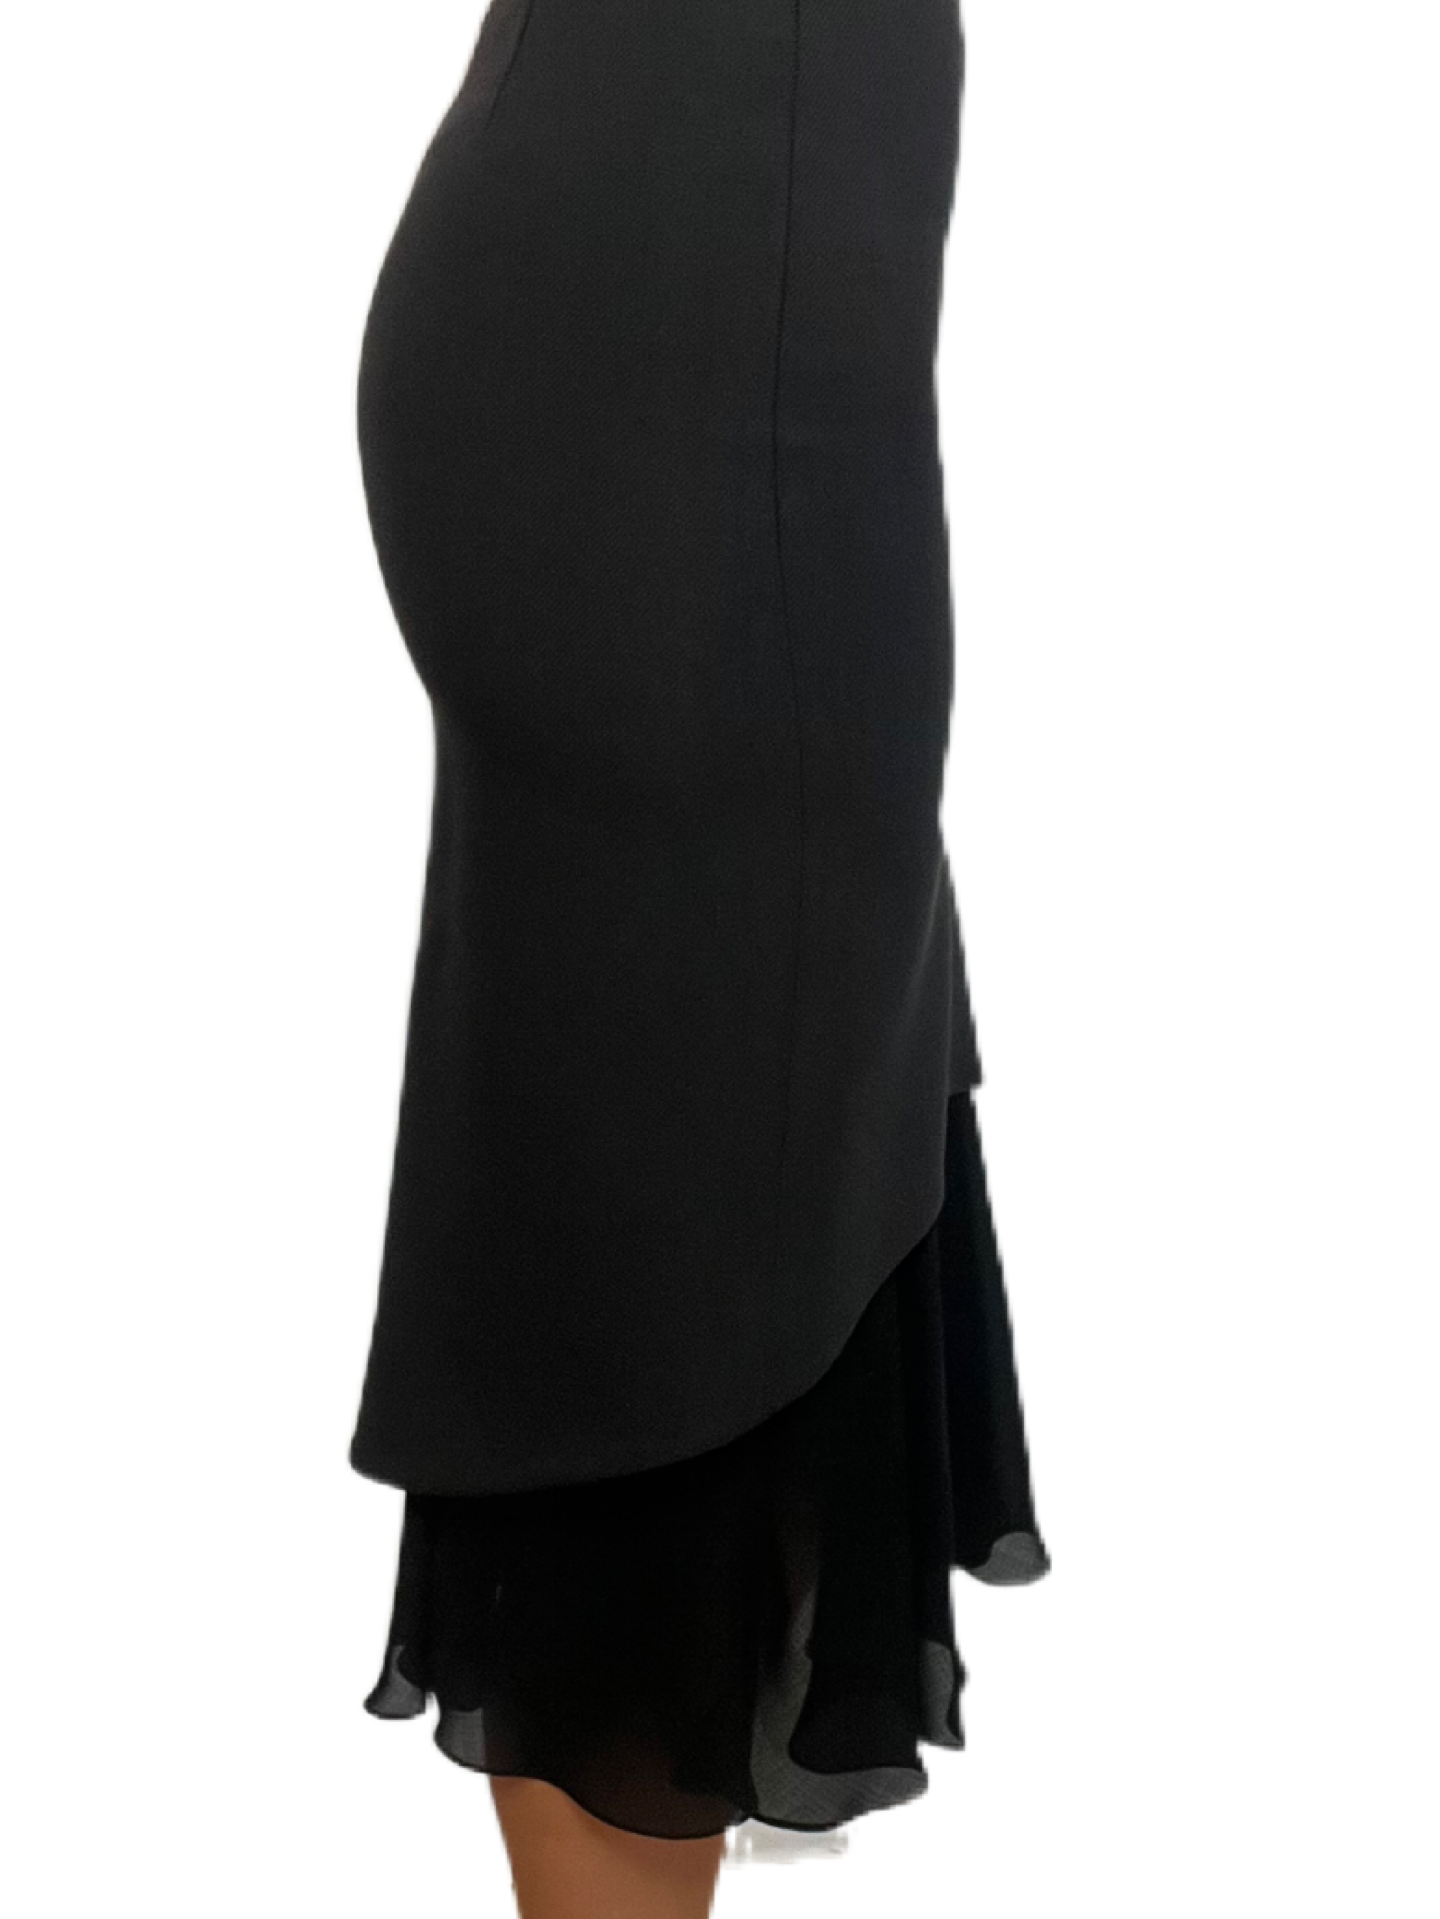 Balenciaga Black Frill Bottom Skirt. Size: 36